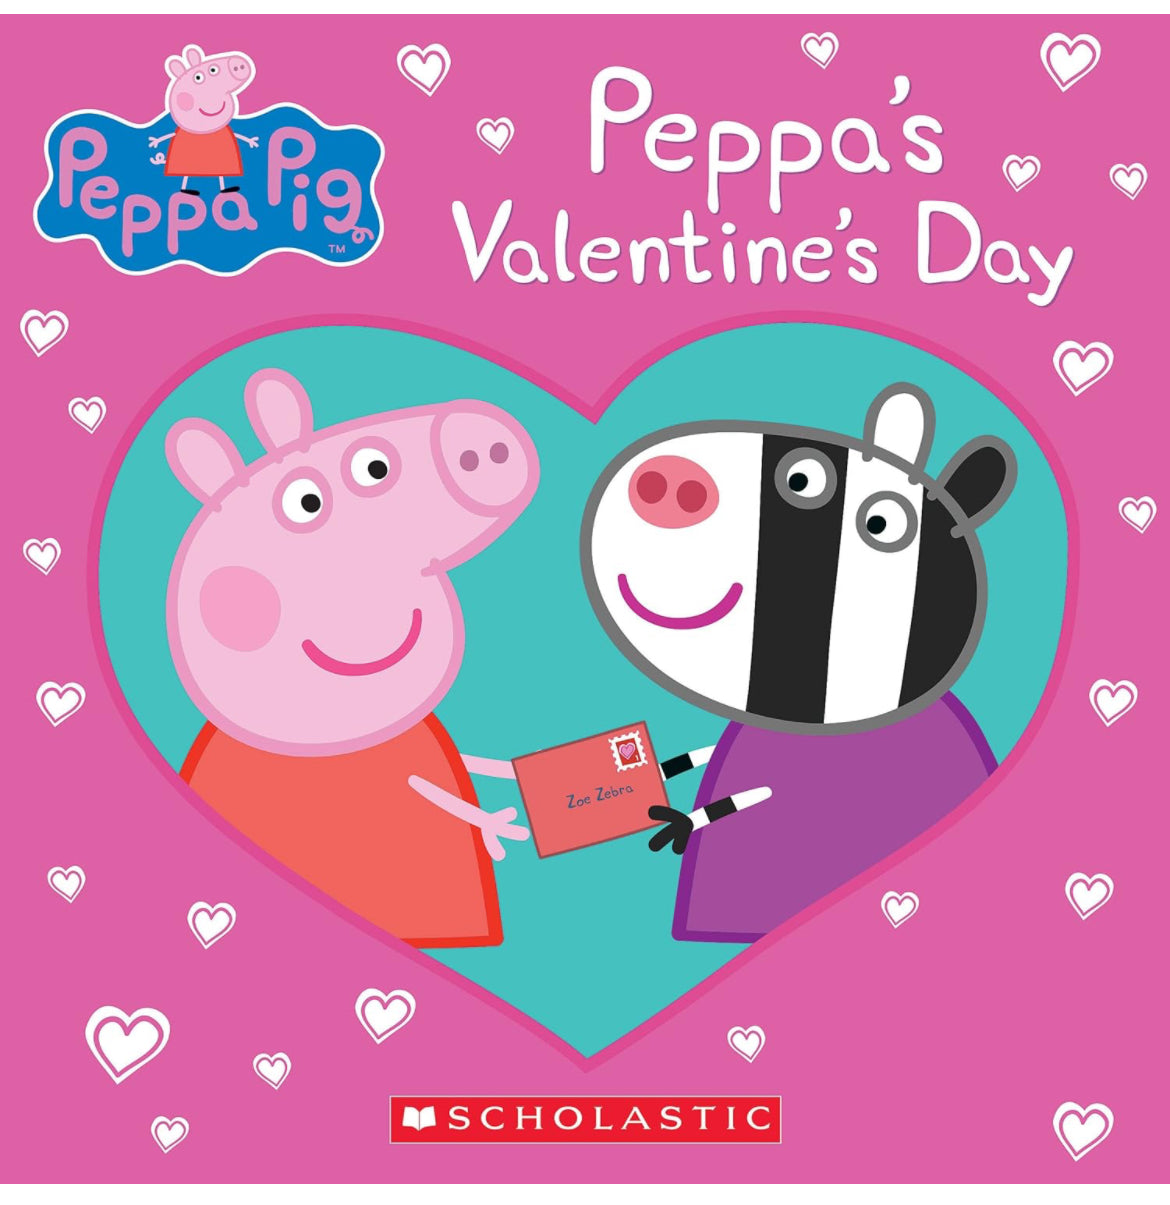 Peppa's Valentine's Day (Peppa Pig) (Paperback)